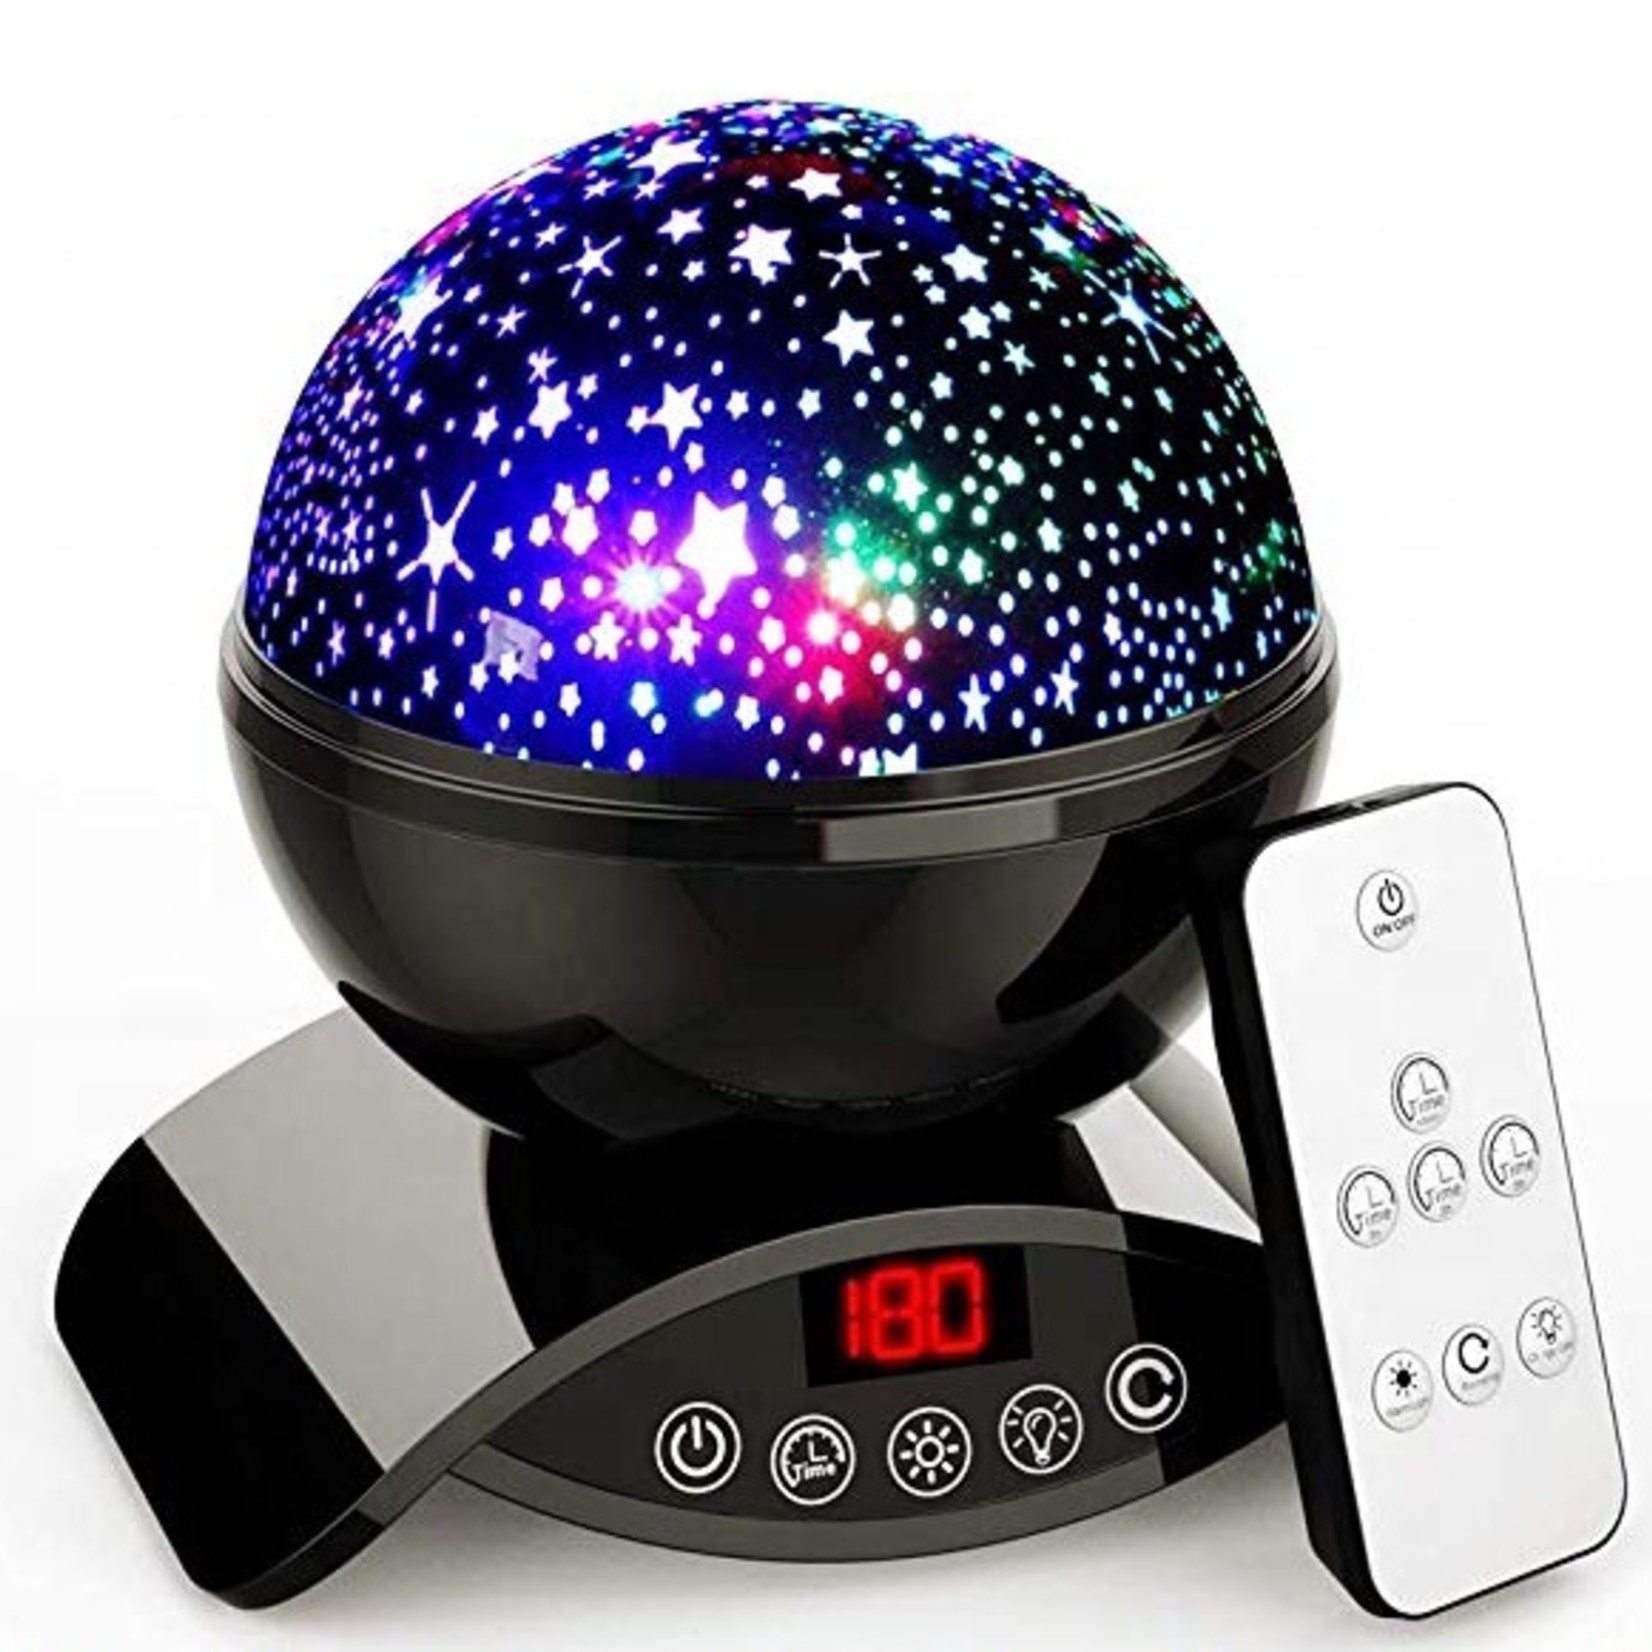 specificatie speelgoed Sleutel Sterrenhemel LED Projector - Lamp Nachtkastje - Nachtlamp Kind - Universum  - Sterrenprojector - Heelal - ohmygoods.nl